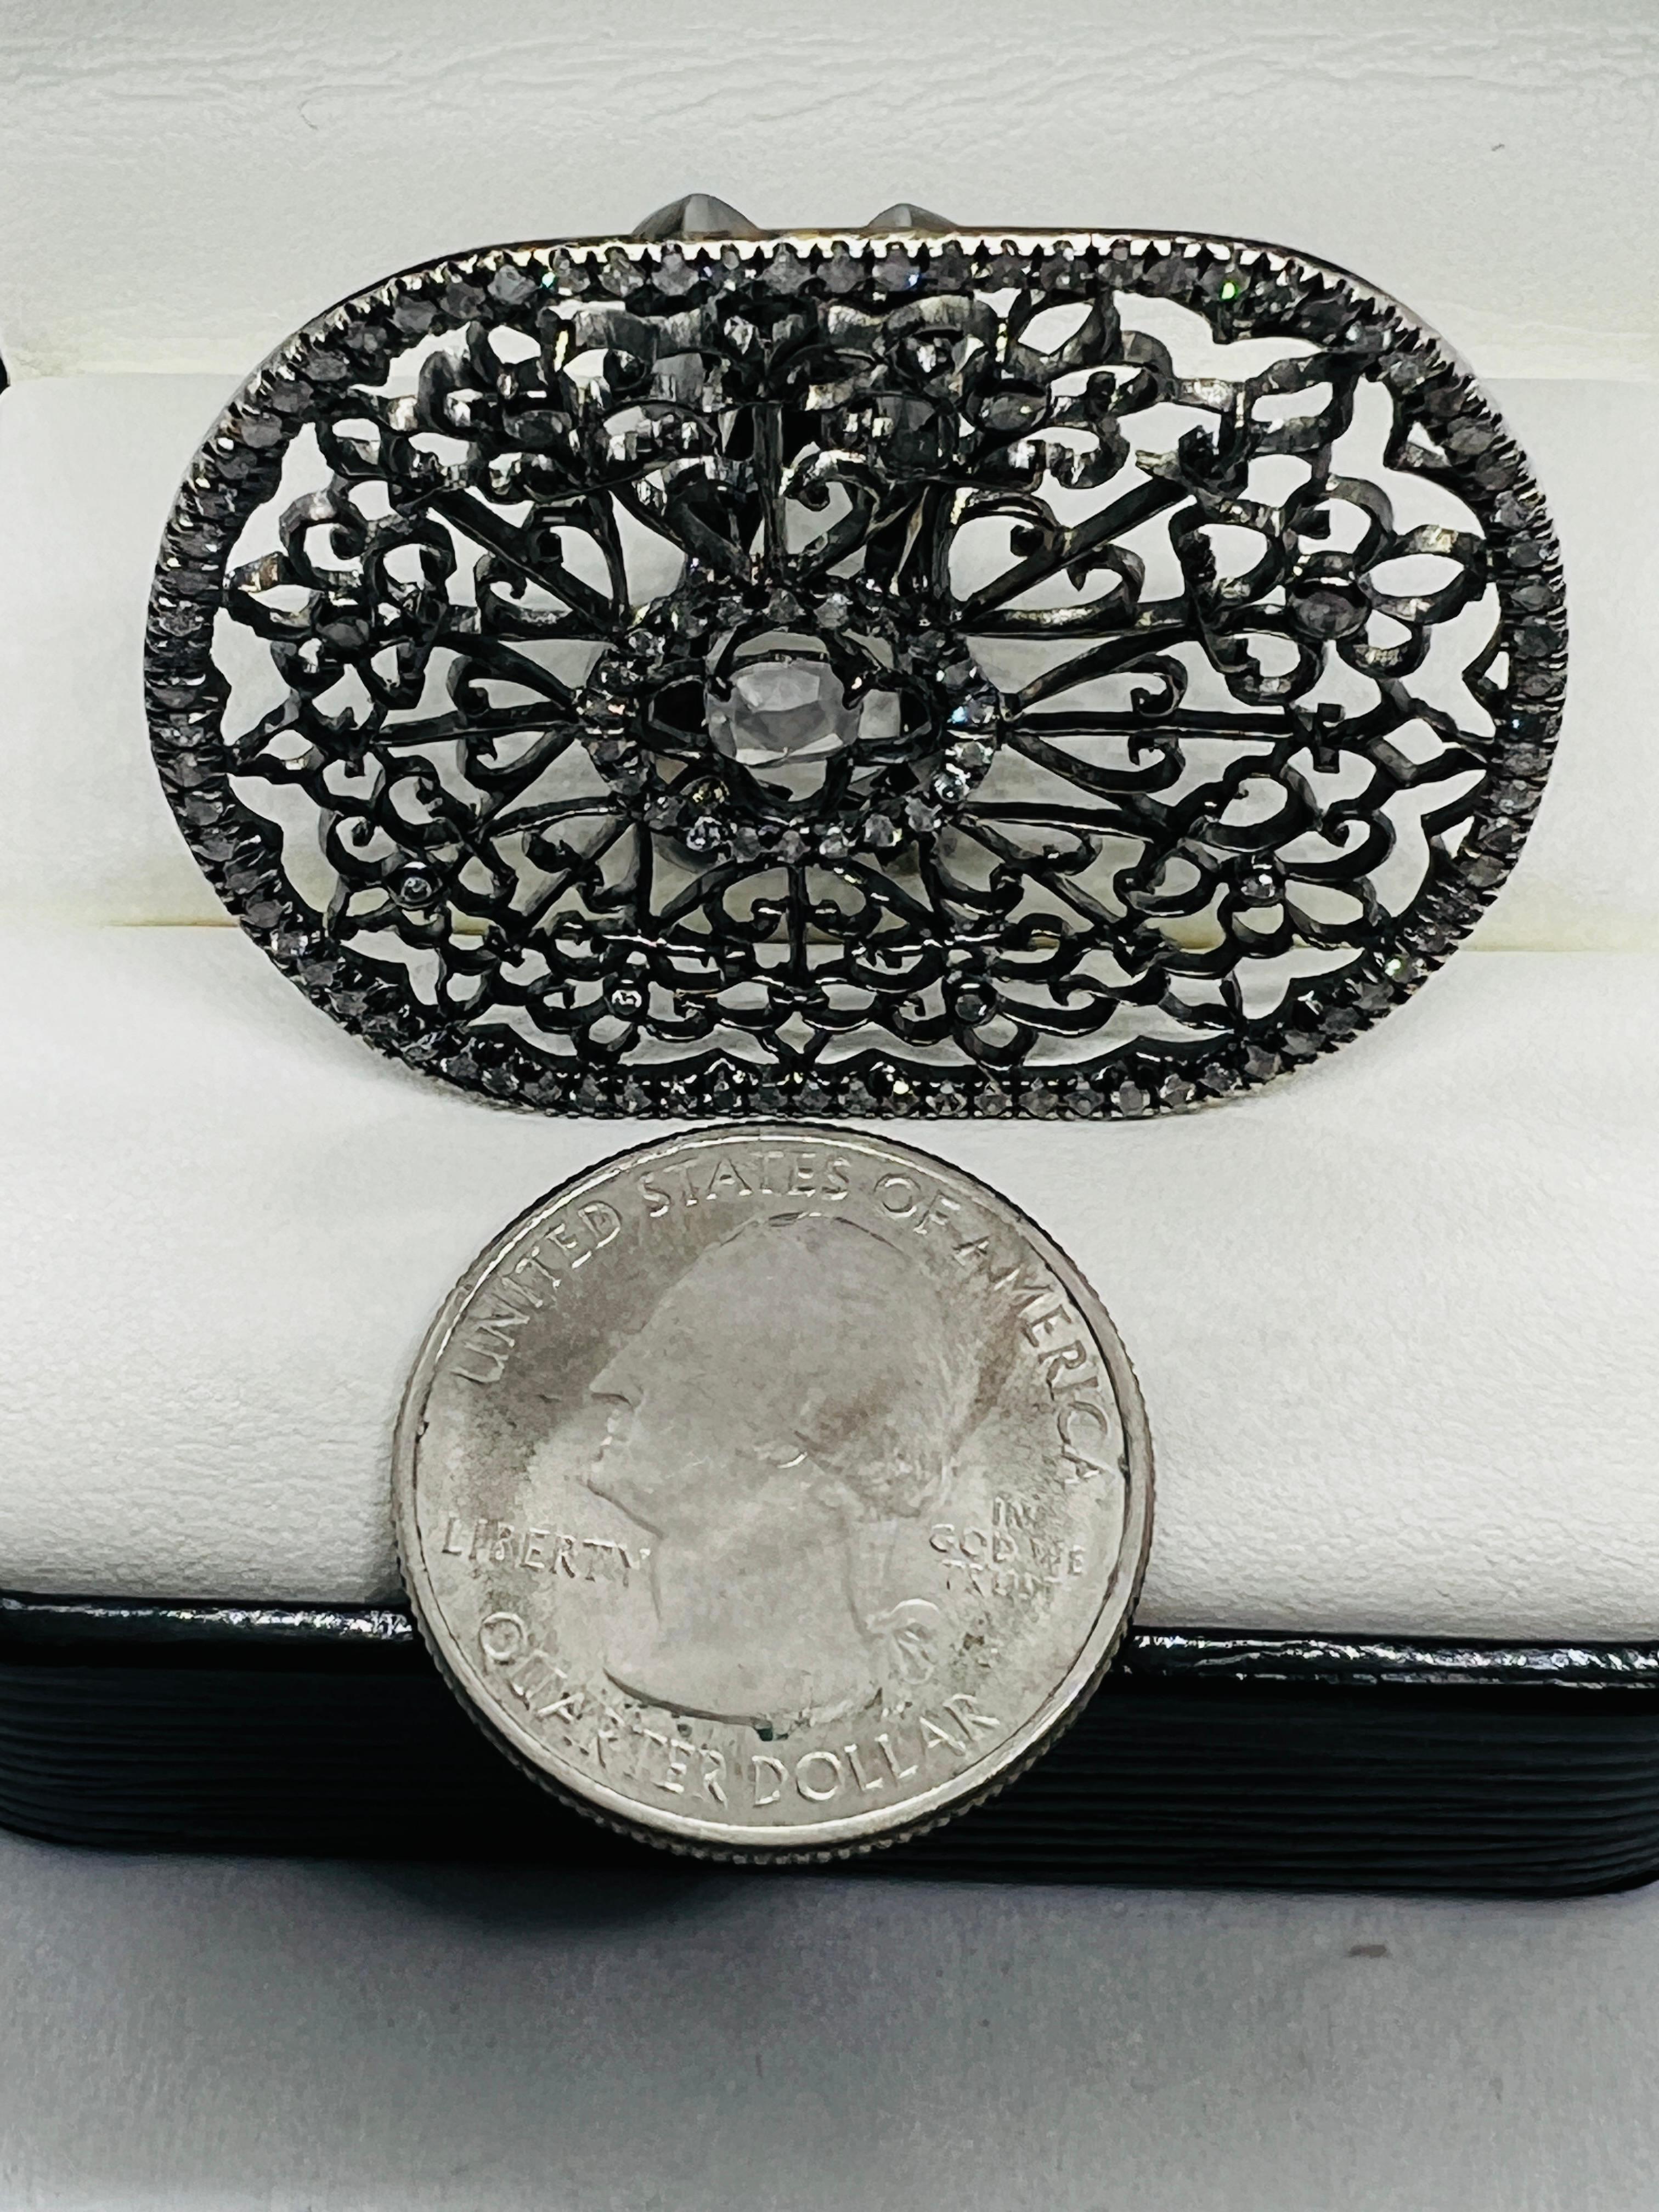 Designer Loree Rodkin 18K White Gold & Diamond Oval Spider Web Ring Size 7.25 For Sale 3